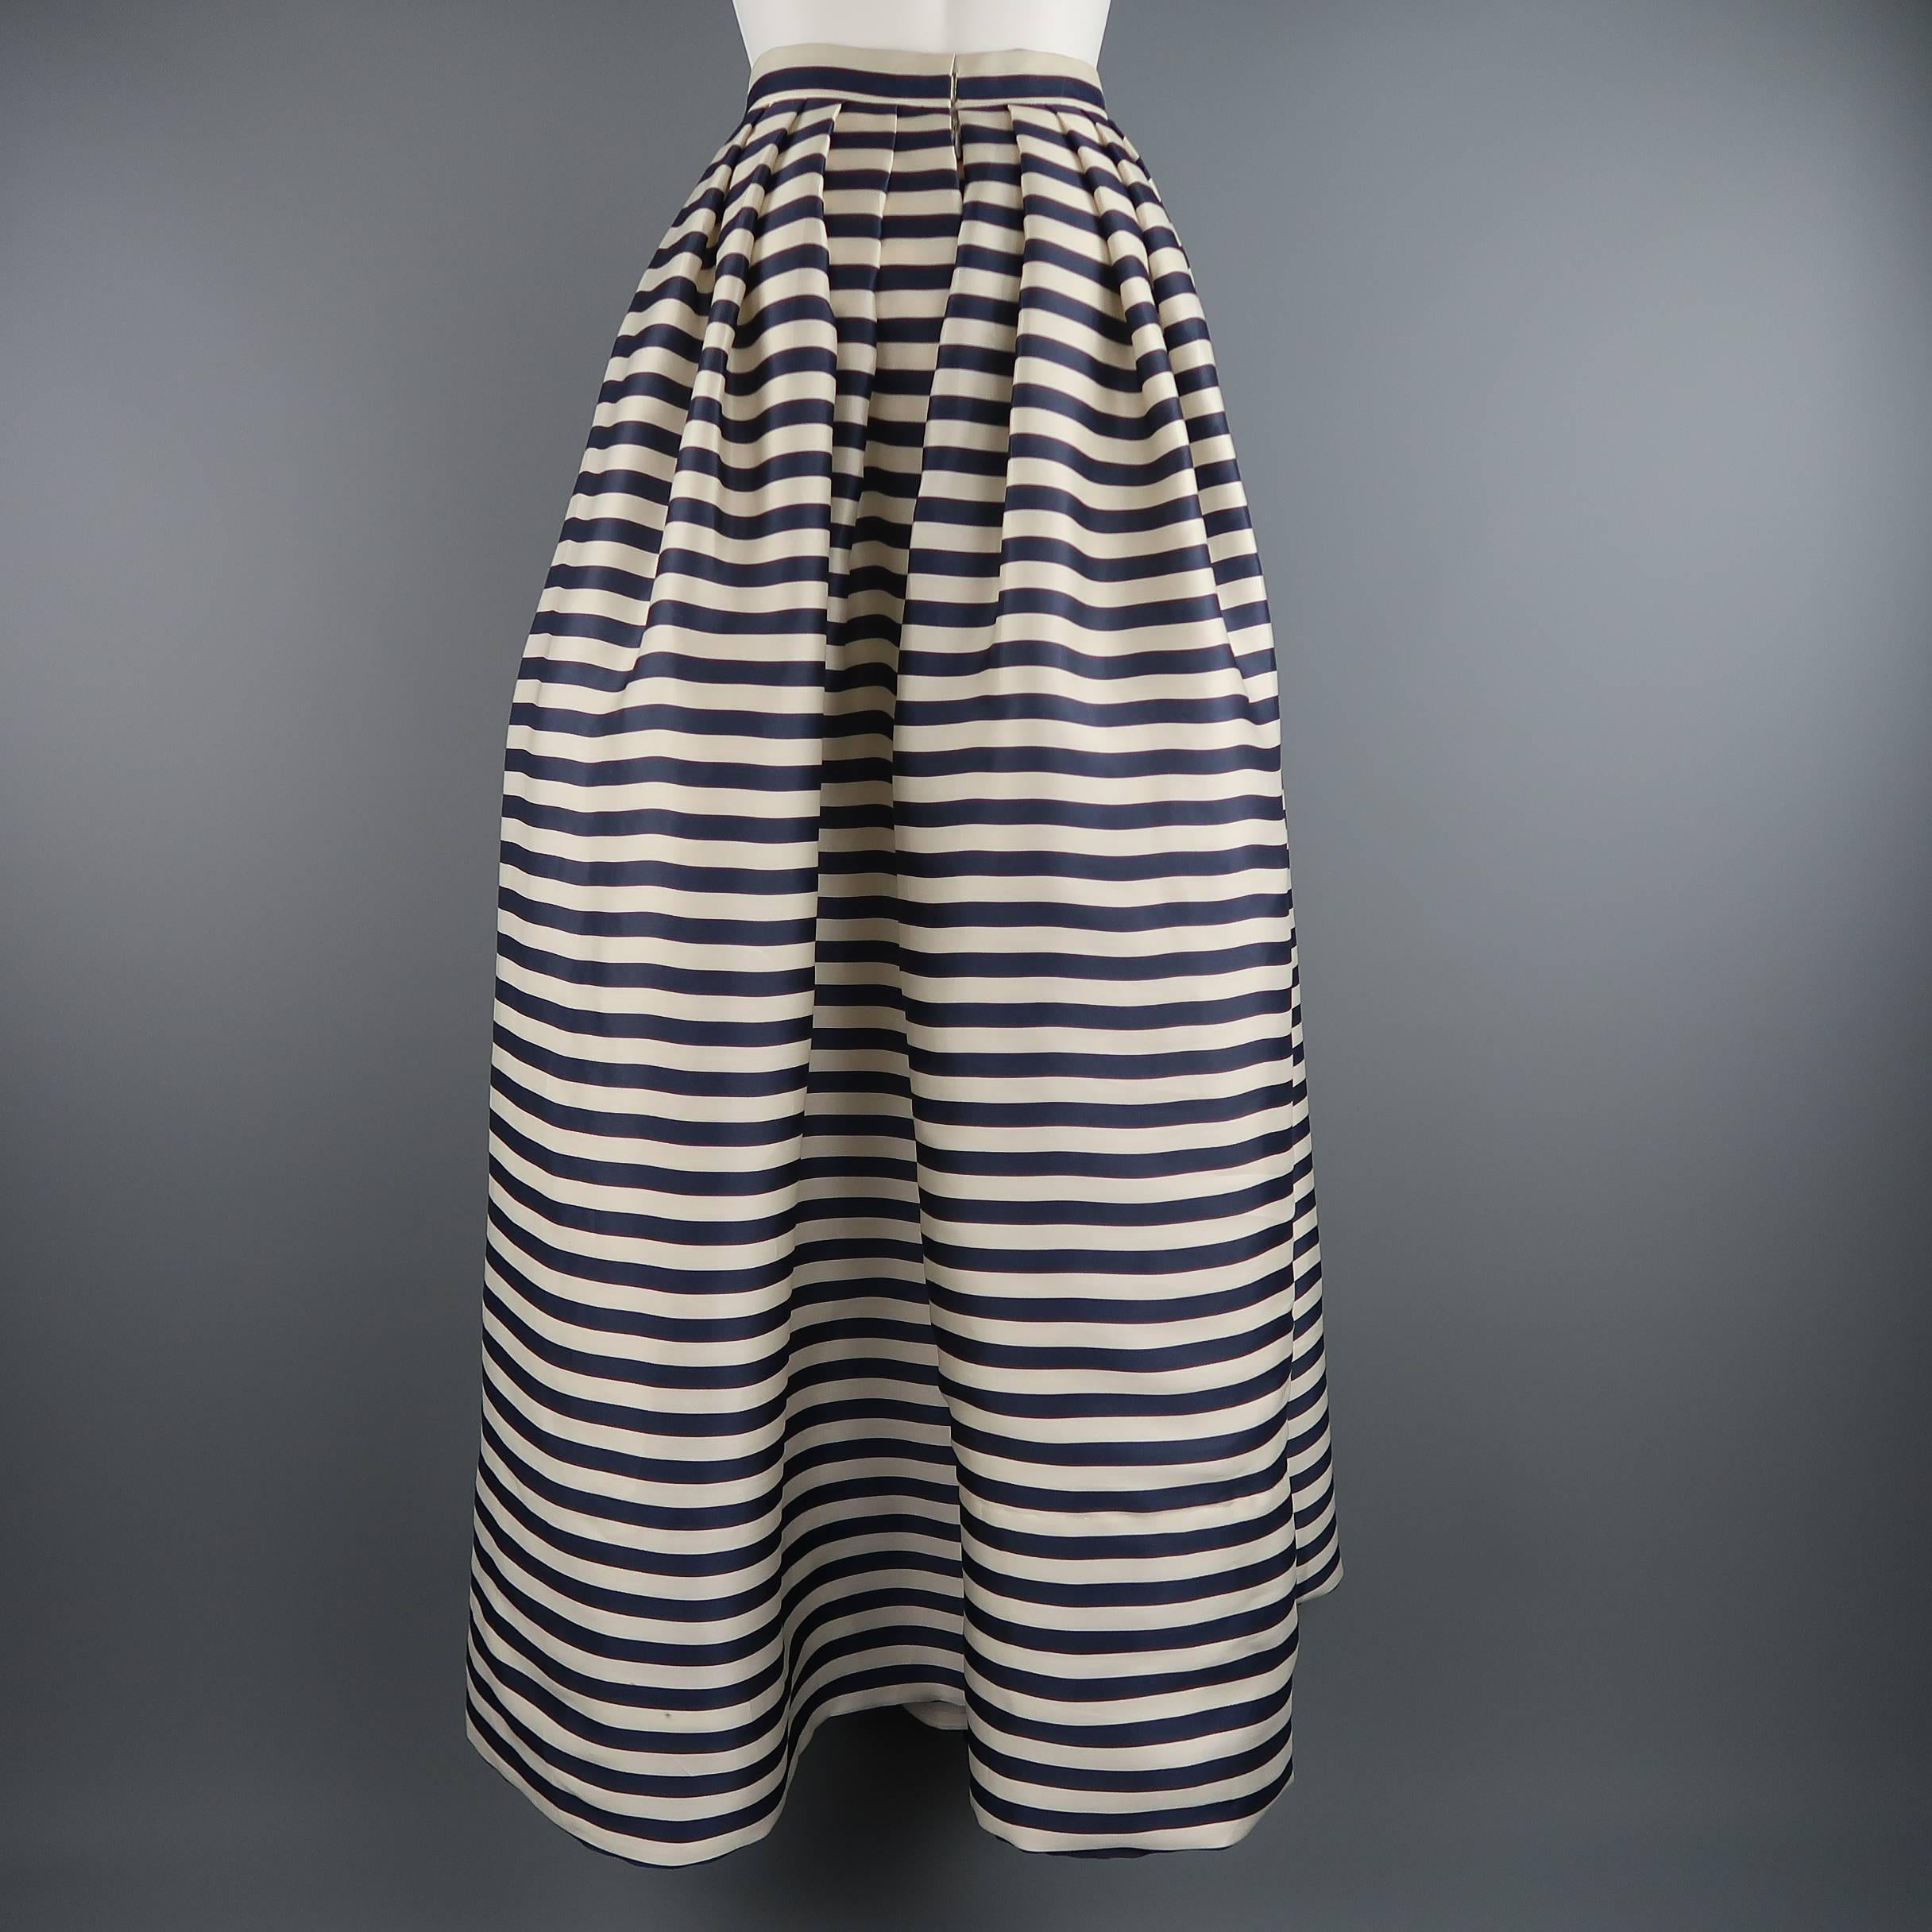 OSCAR DE LA RENTA Skirt Size 6 Cream & Navy Striped Silk Pleated Ball Gown Skirt 2